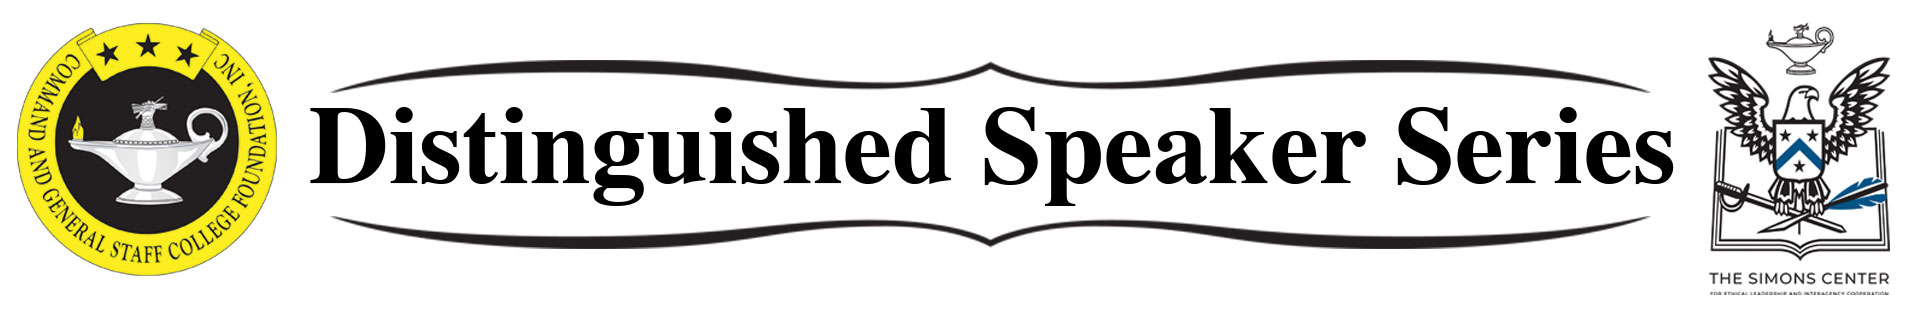 Distinguished Speaker Series logo